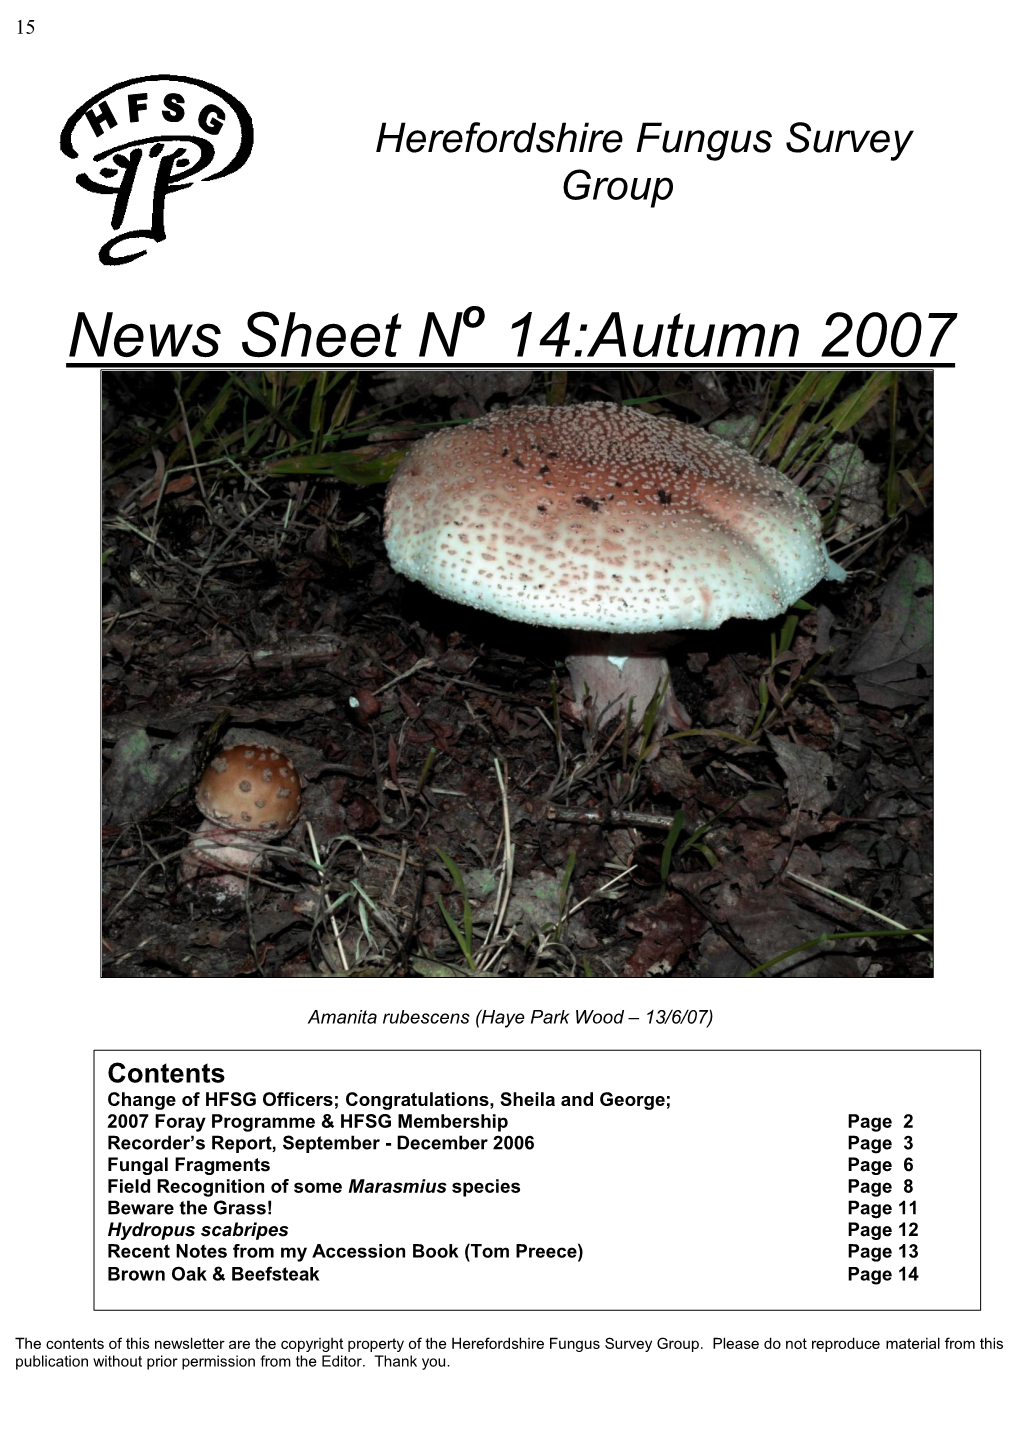 News Sheet N 14:Autumn 2007